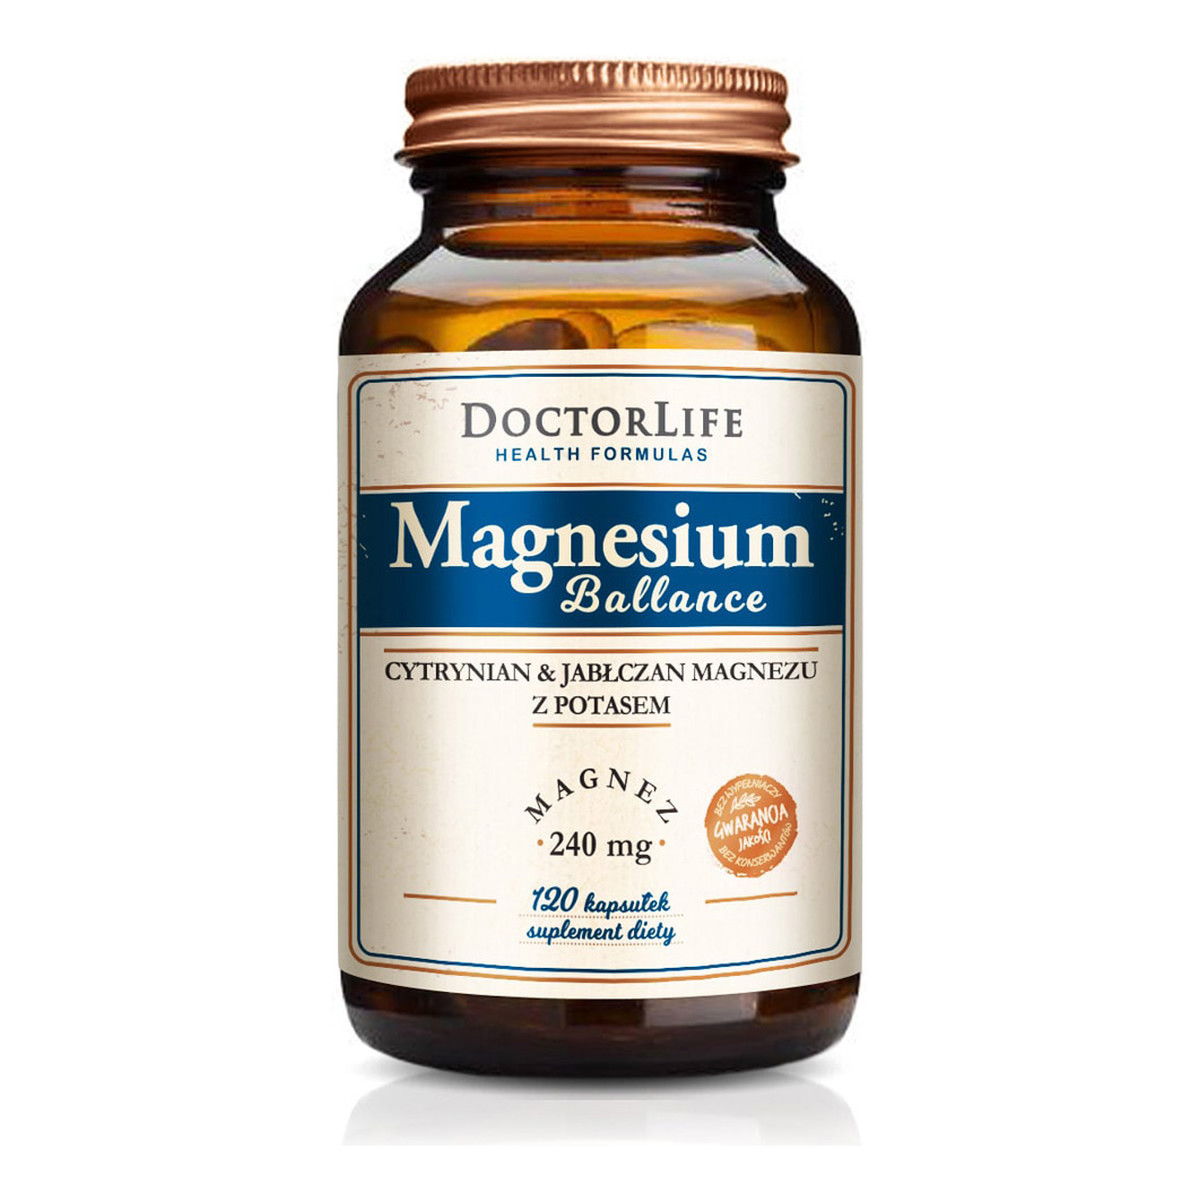 Doctor Life Magnesium ballance cytrynian i jabłczan magnezu magnez 240mg suplement diety 120 kapsułek